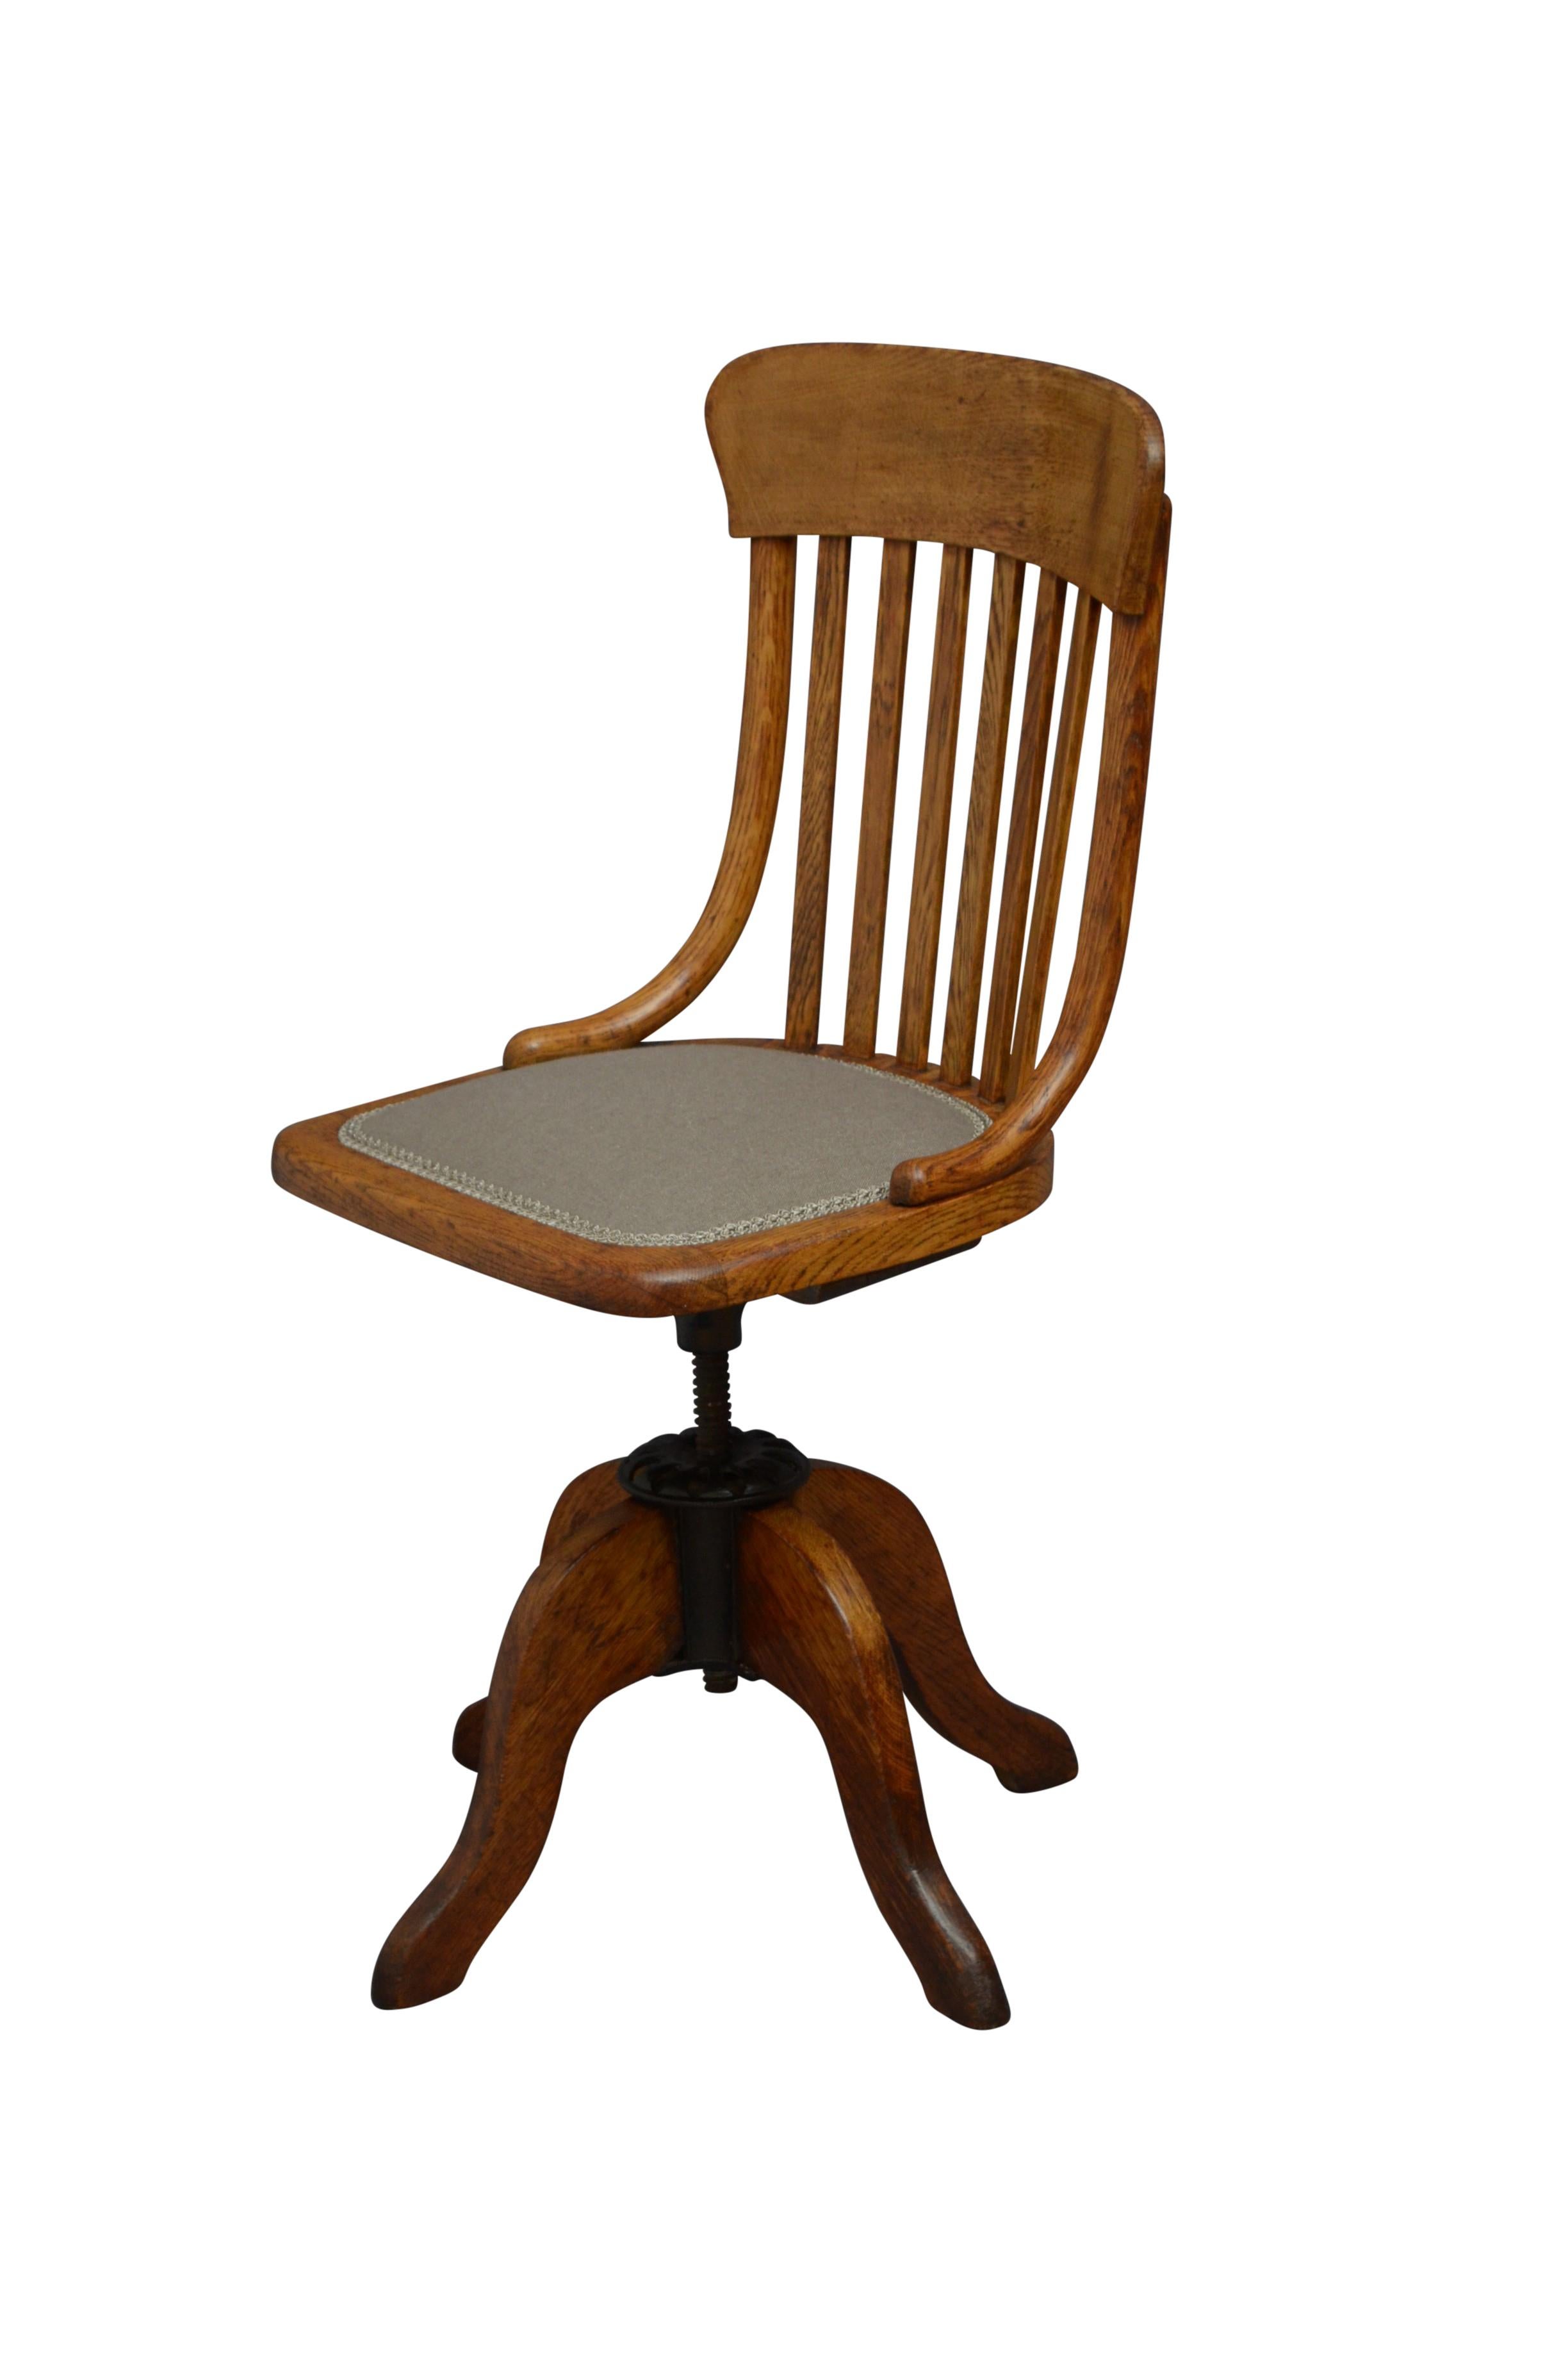 Edwardian Unusual Early 20th Century Solid Oak Office Chair